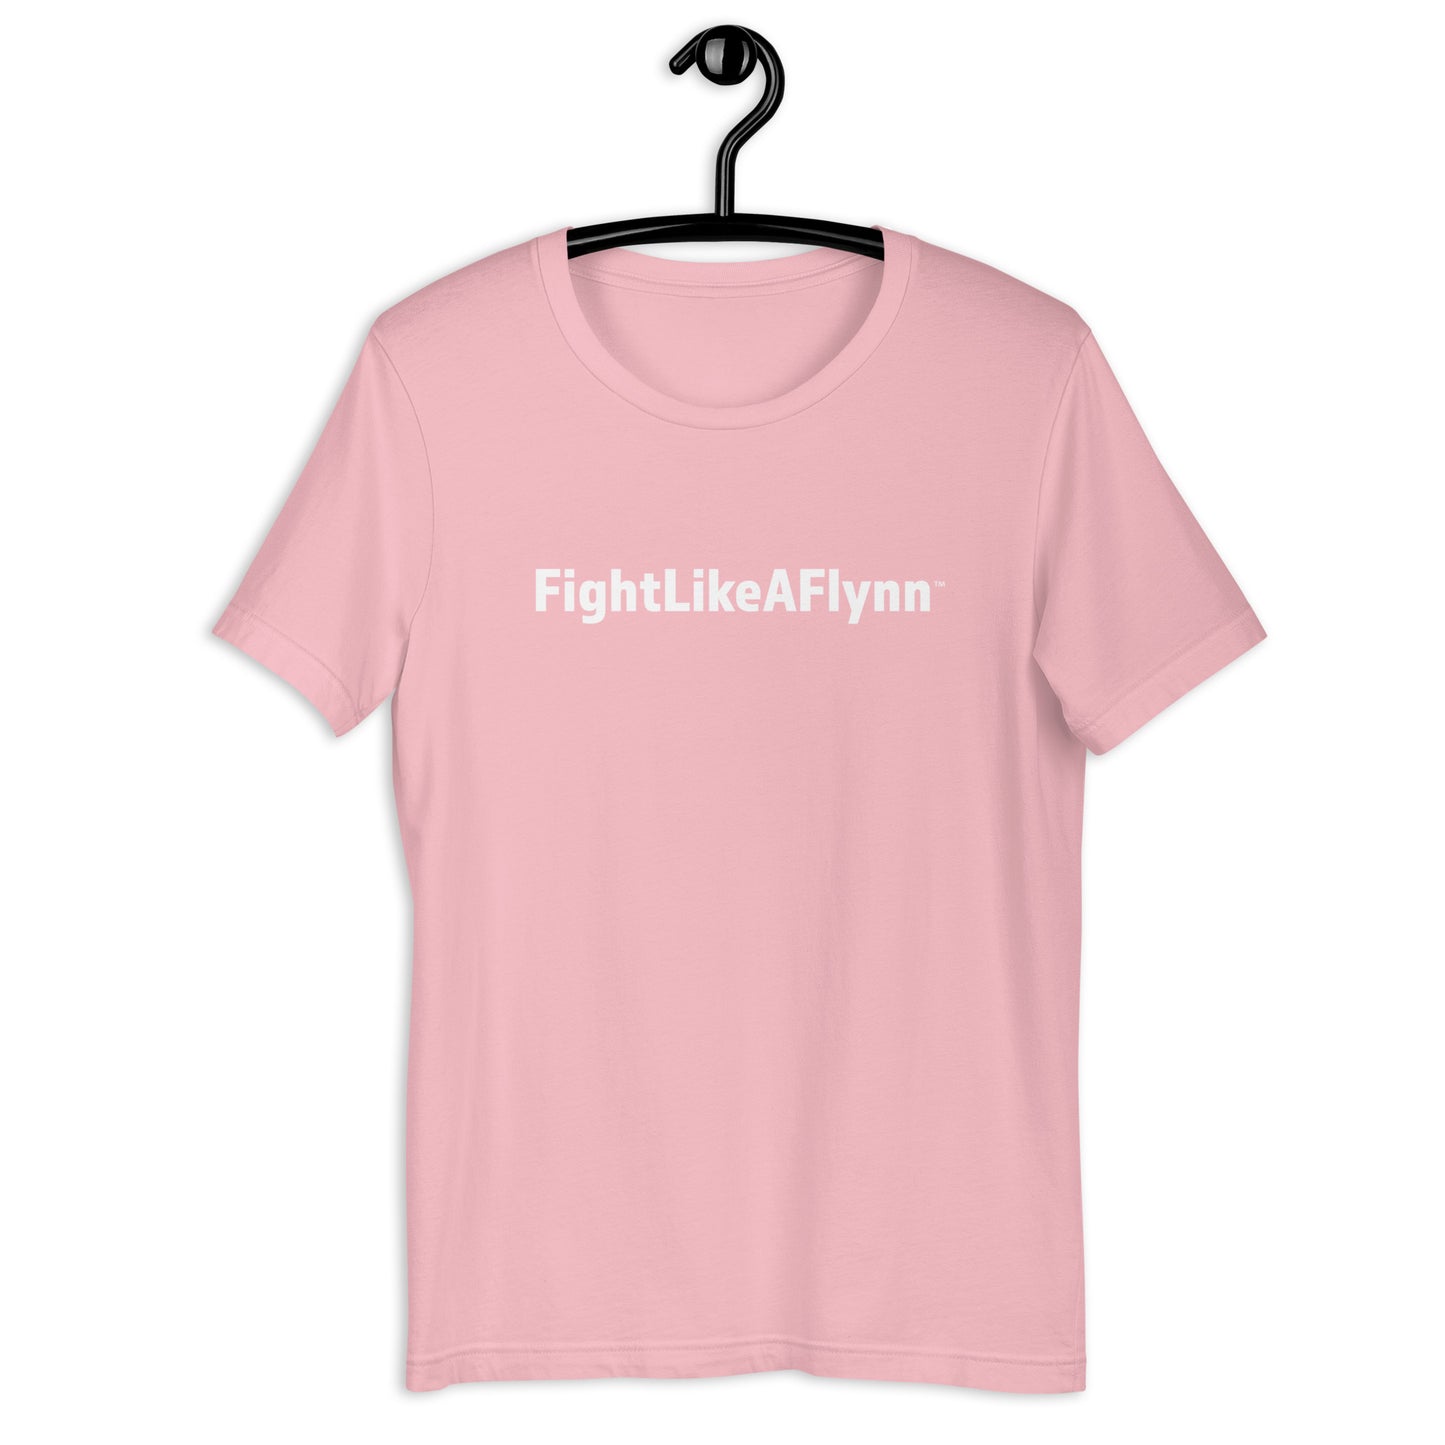 Fight Like A Flynn - Unisex T-Shirt